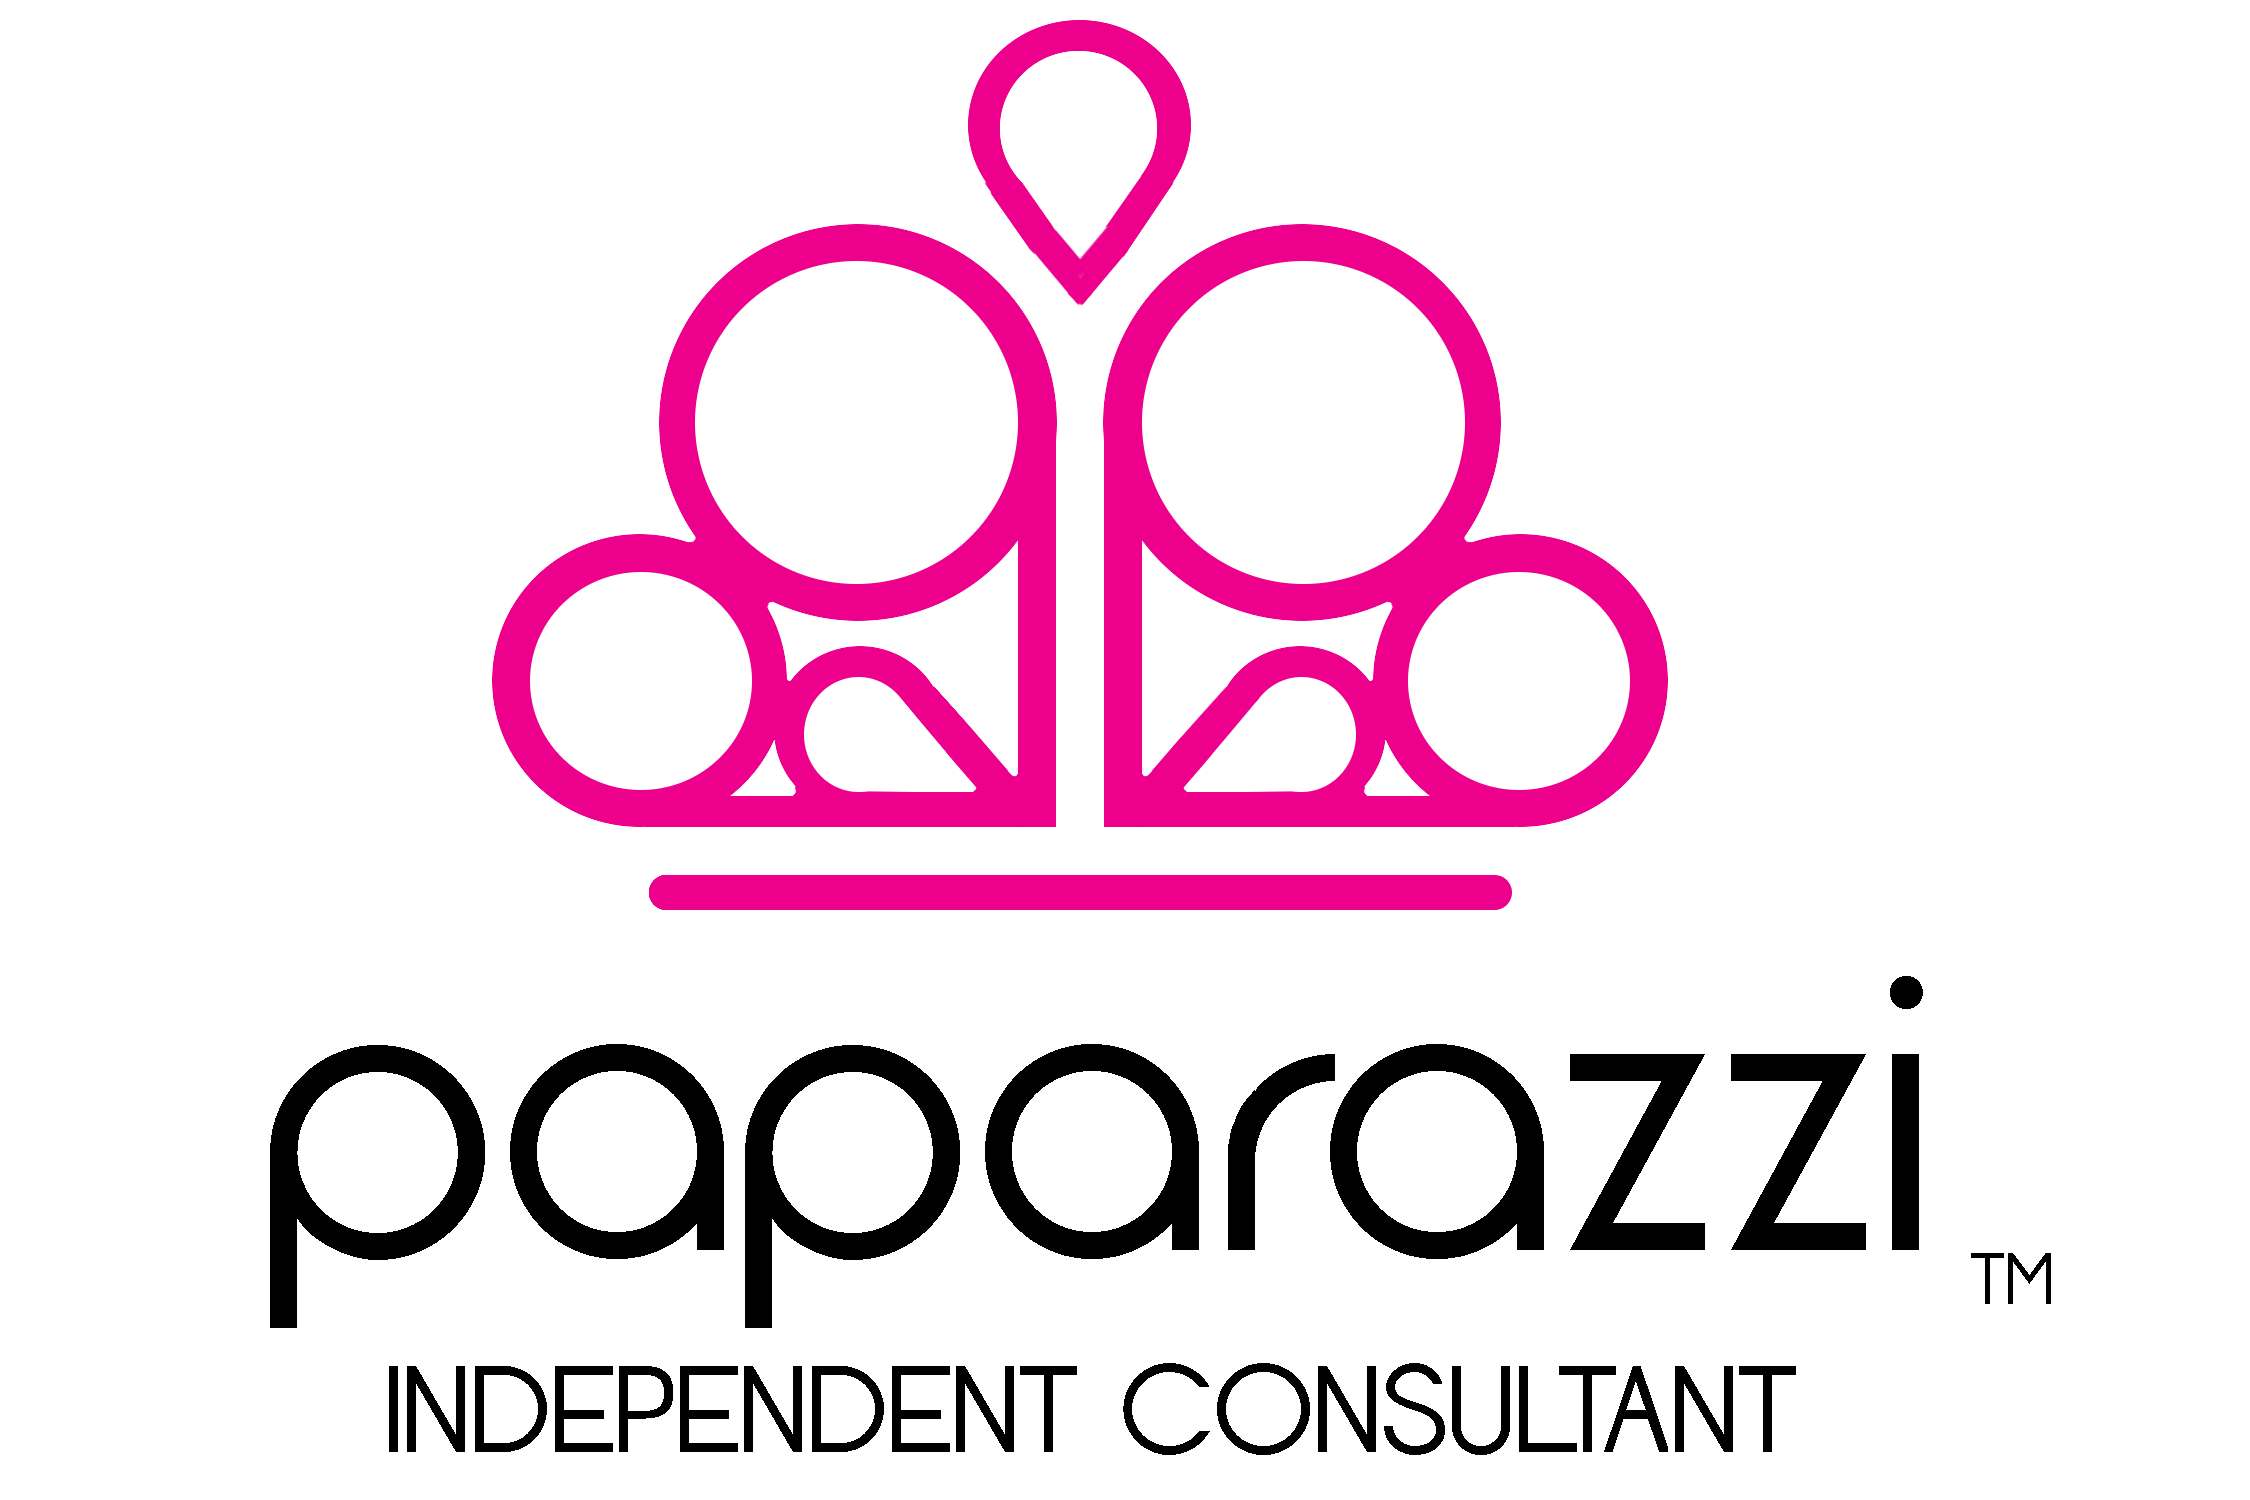 Paparazzi Logo - Paparazzi independent consultant Logos